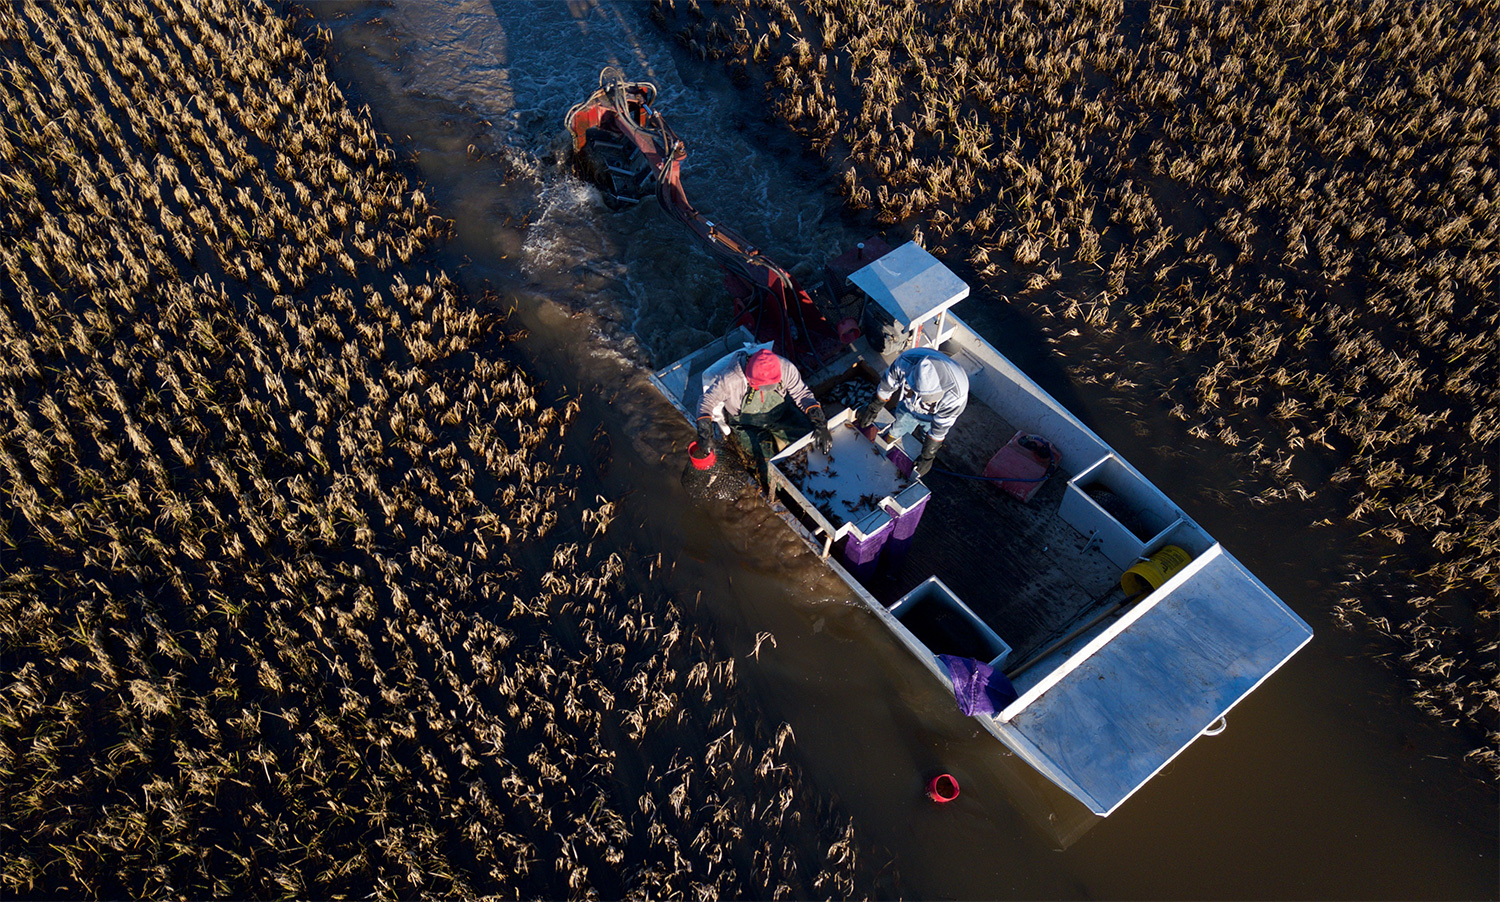 Louisiana crawfish farm